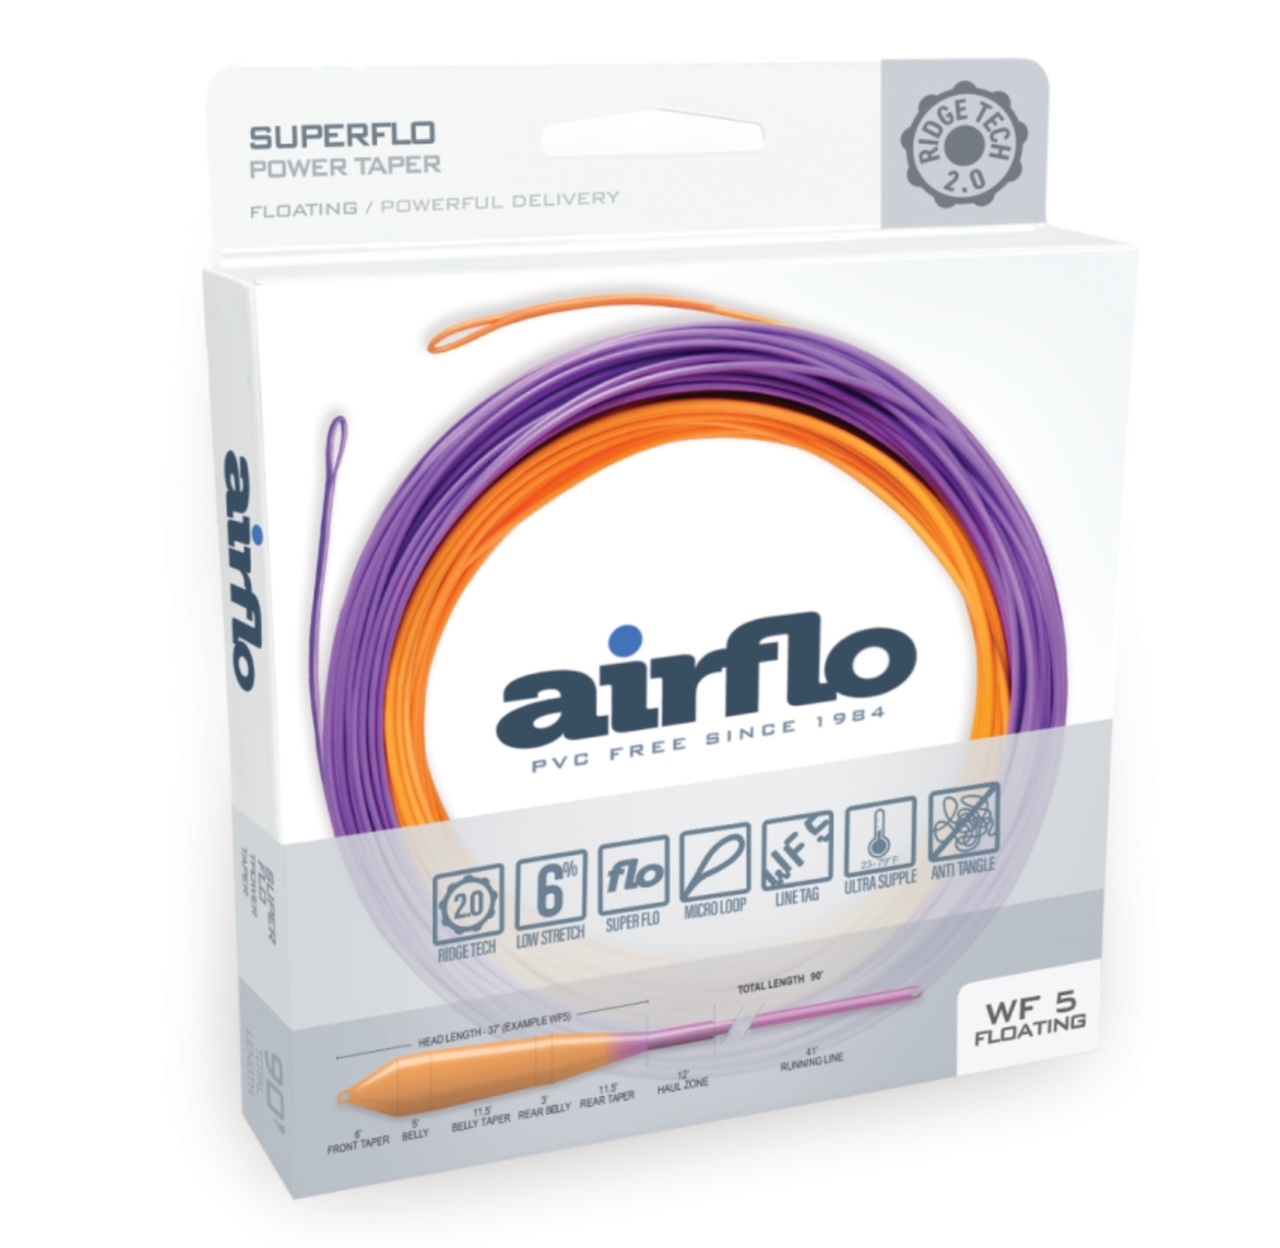 Airflo Superflo Ridge 2.0 Power Taper - WF6F - Sunburst/Purple